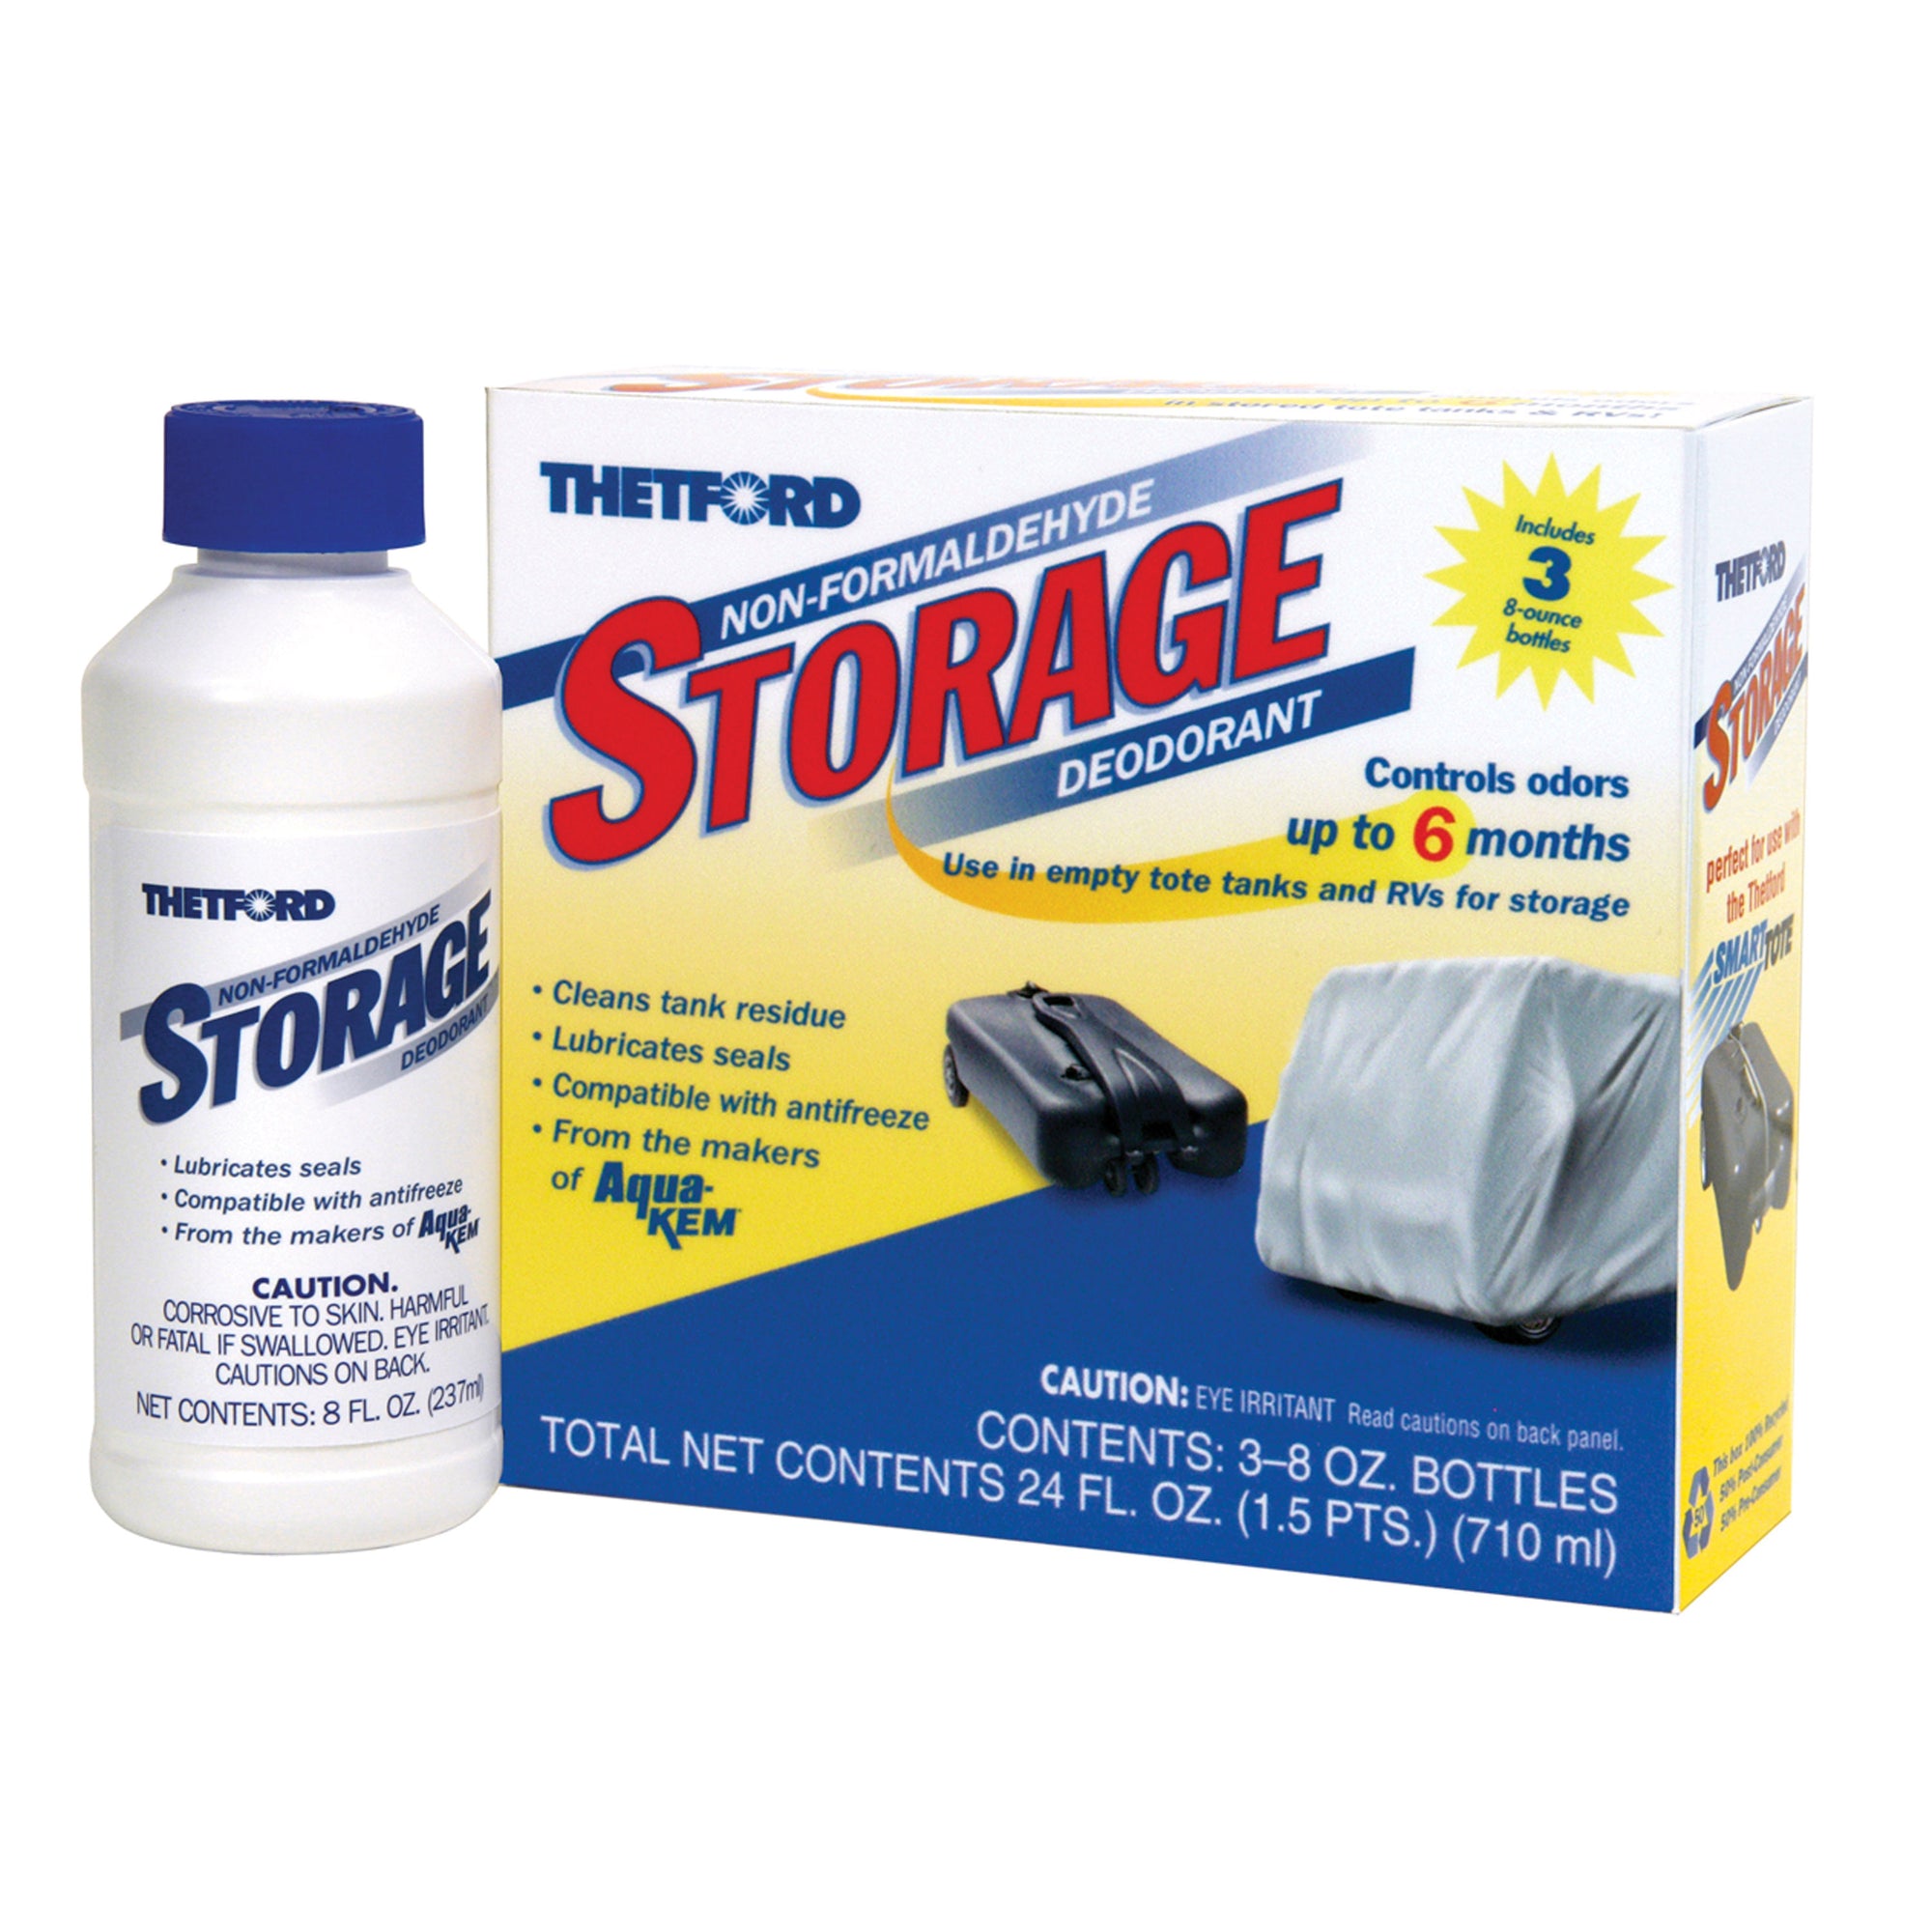 Thetford 32900 Storage Deodorant, 8 oz. - 3 Pack